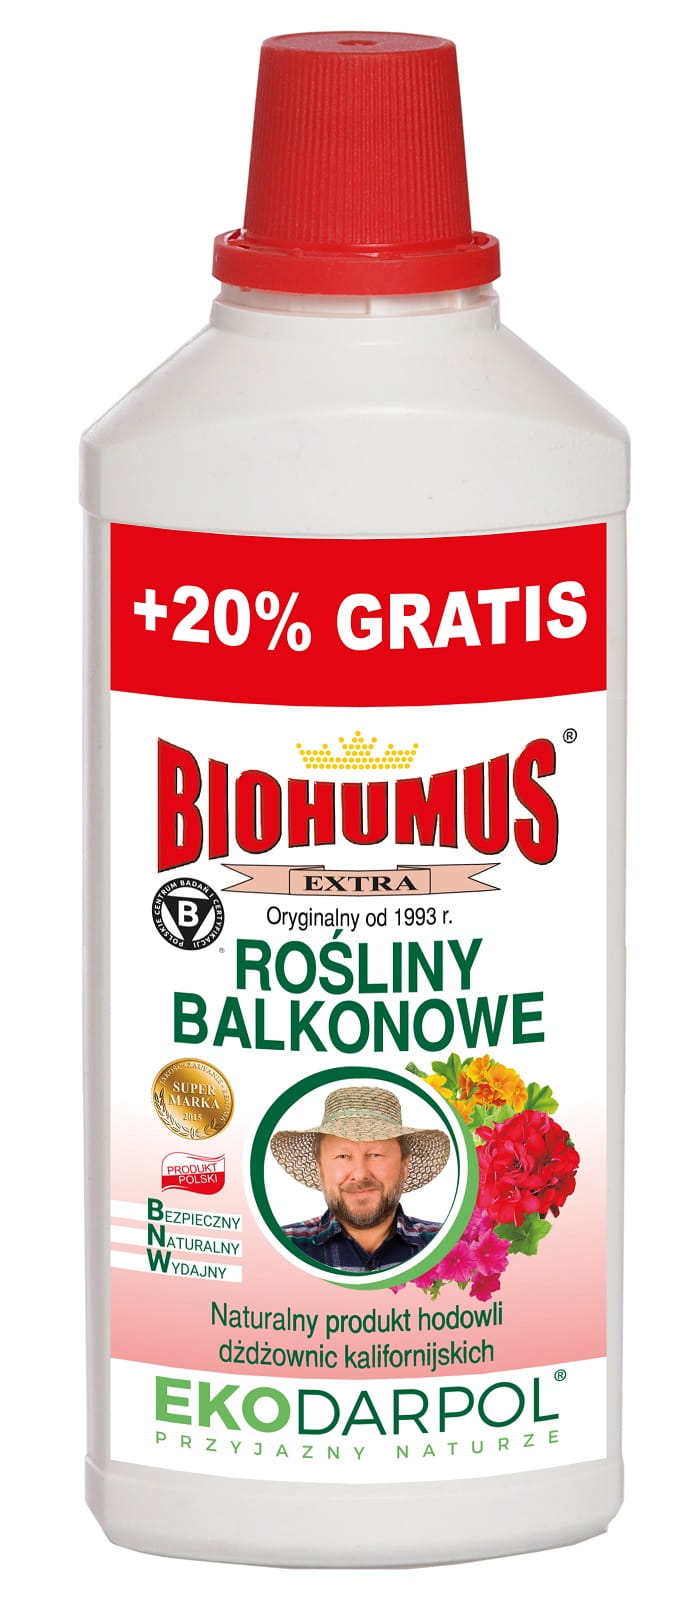  Biohumus ekstra rośliny balkonowe 1L – Ekodarpol 